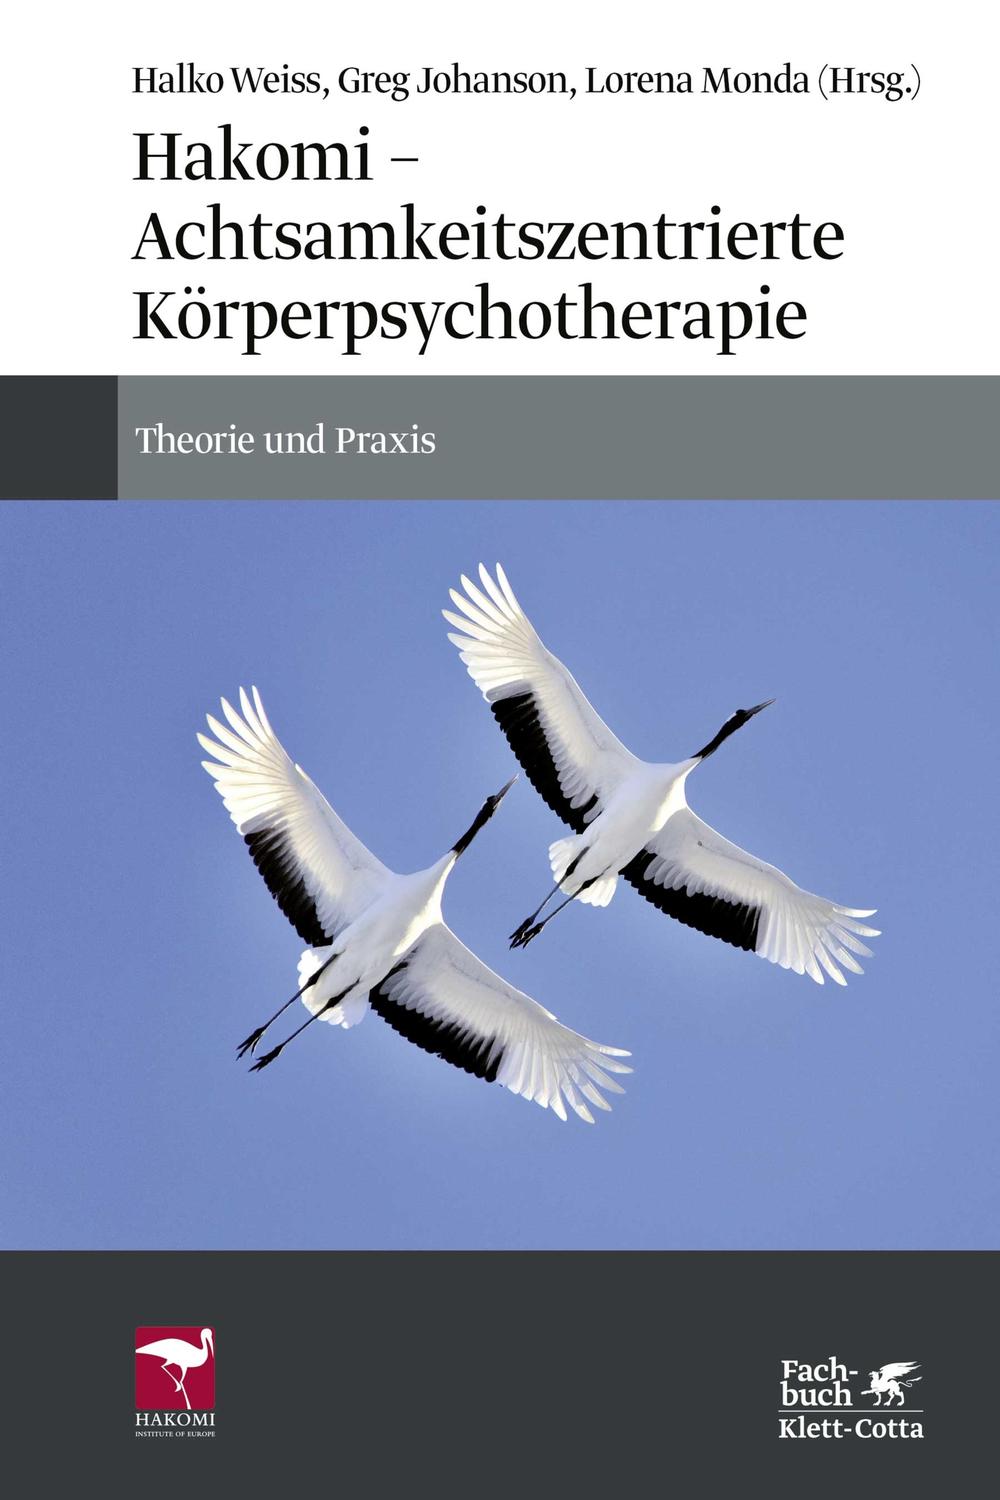 Hakomi - Achtsamkeitszentrierte Körperpsychotherapie - Halko Weiss, Greg Johanson, Lorena Monda